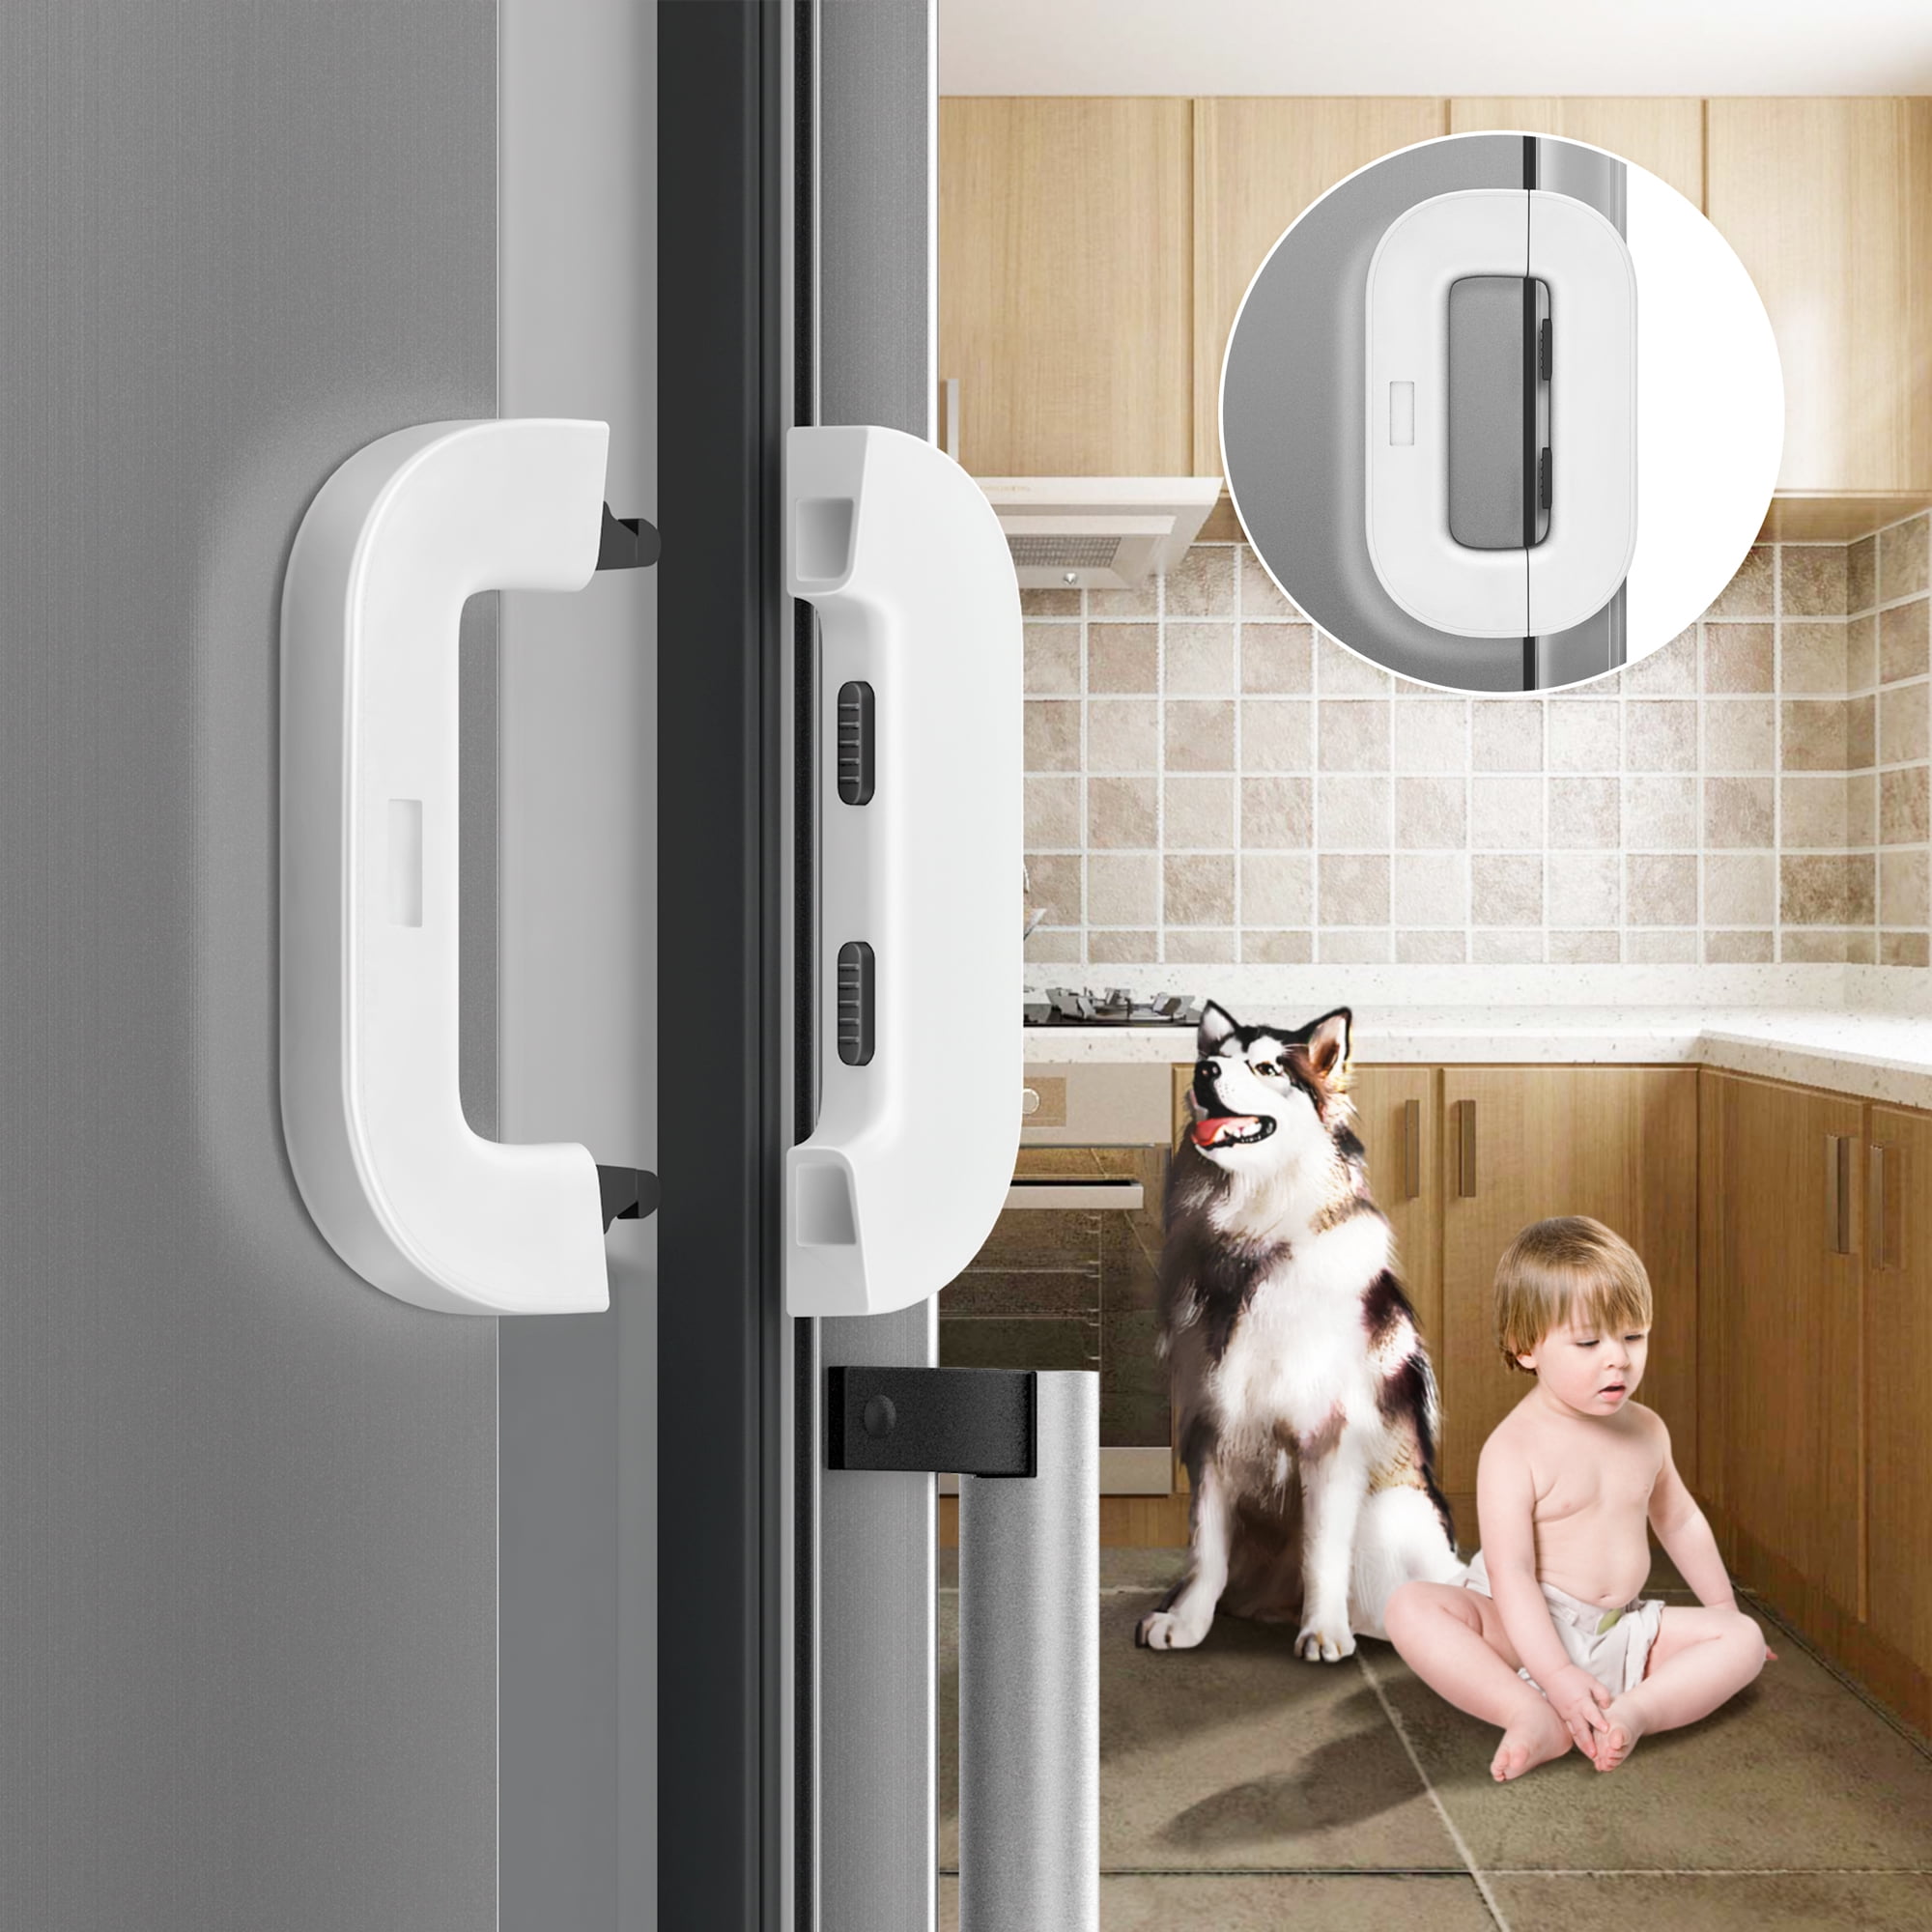 5 Pack Child Proof Refrigerator Lock, QYESWHSR Fridge Locks for Kids with  Sticky Adhesive Pads, Child Safety Locks for Doors, RV Refrigerator, Oven